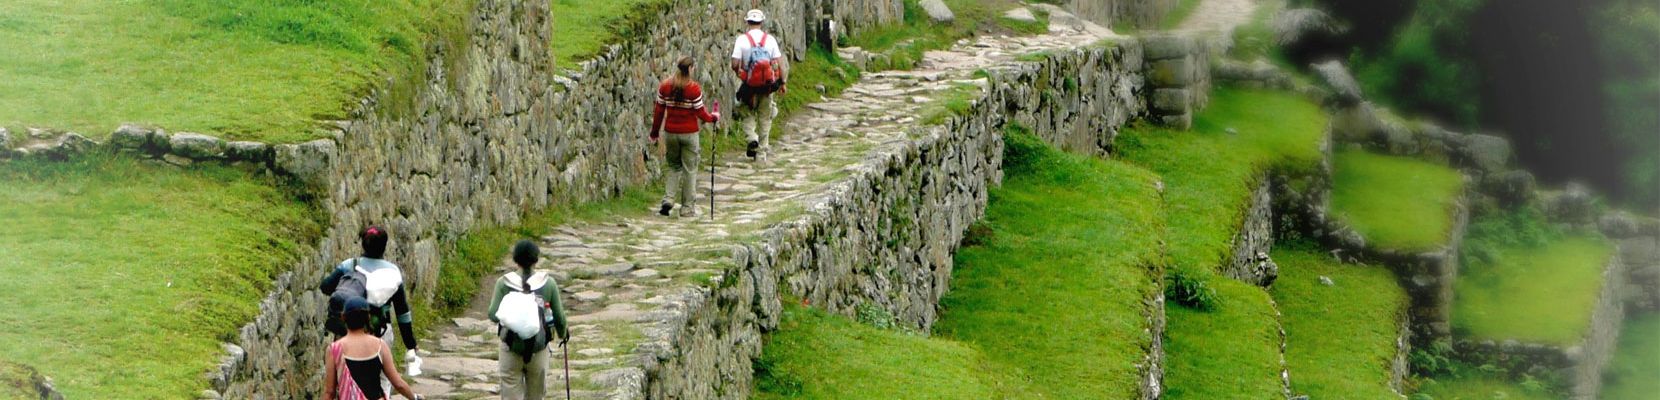 visite Machu Picchu - voyage sur mesure perou